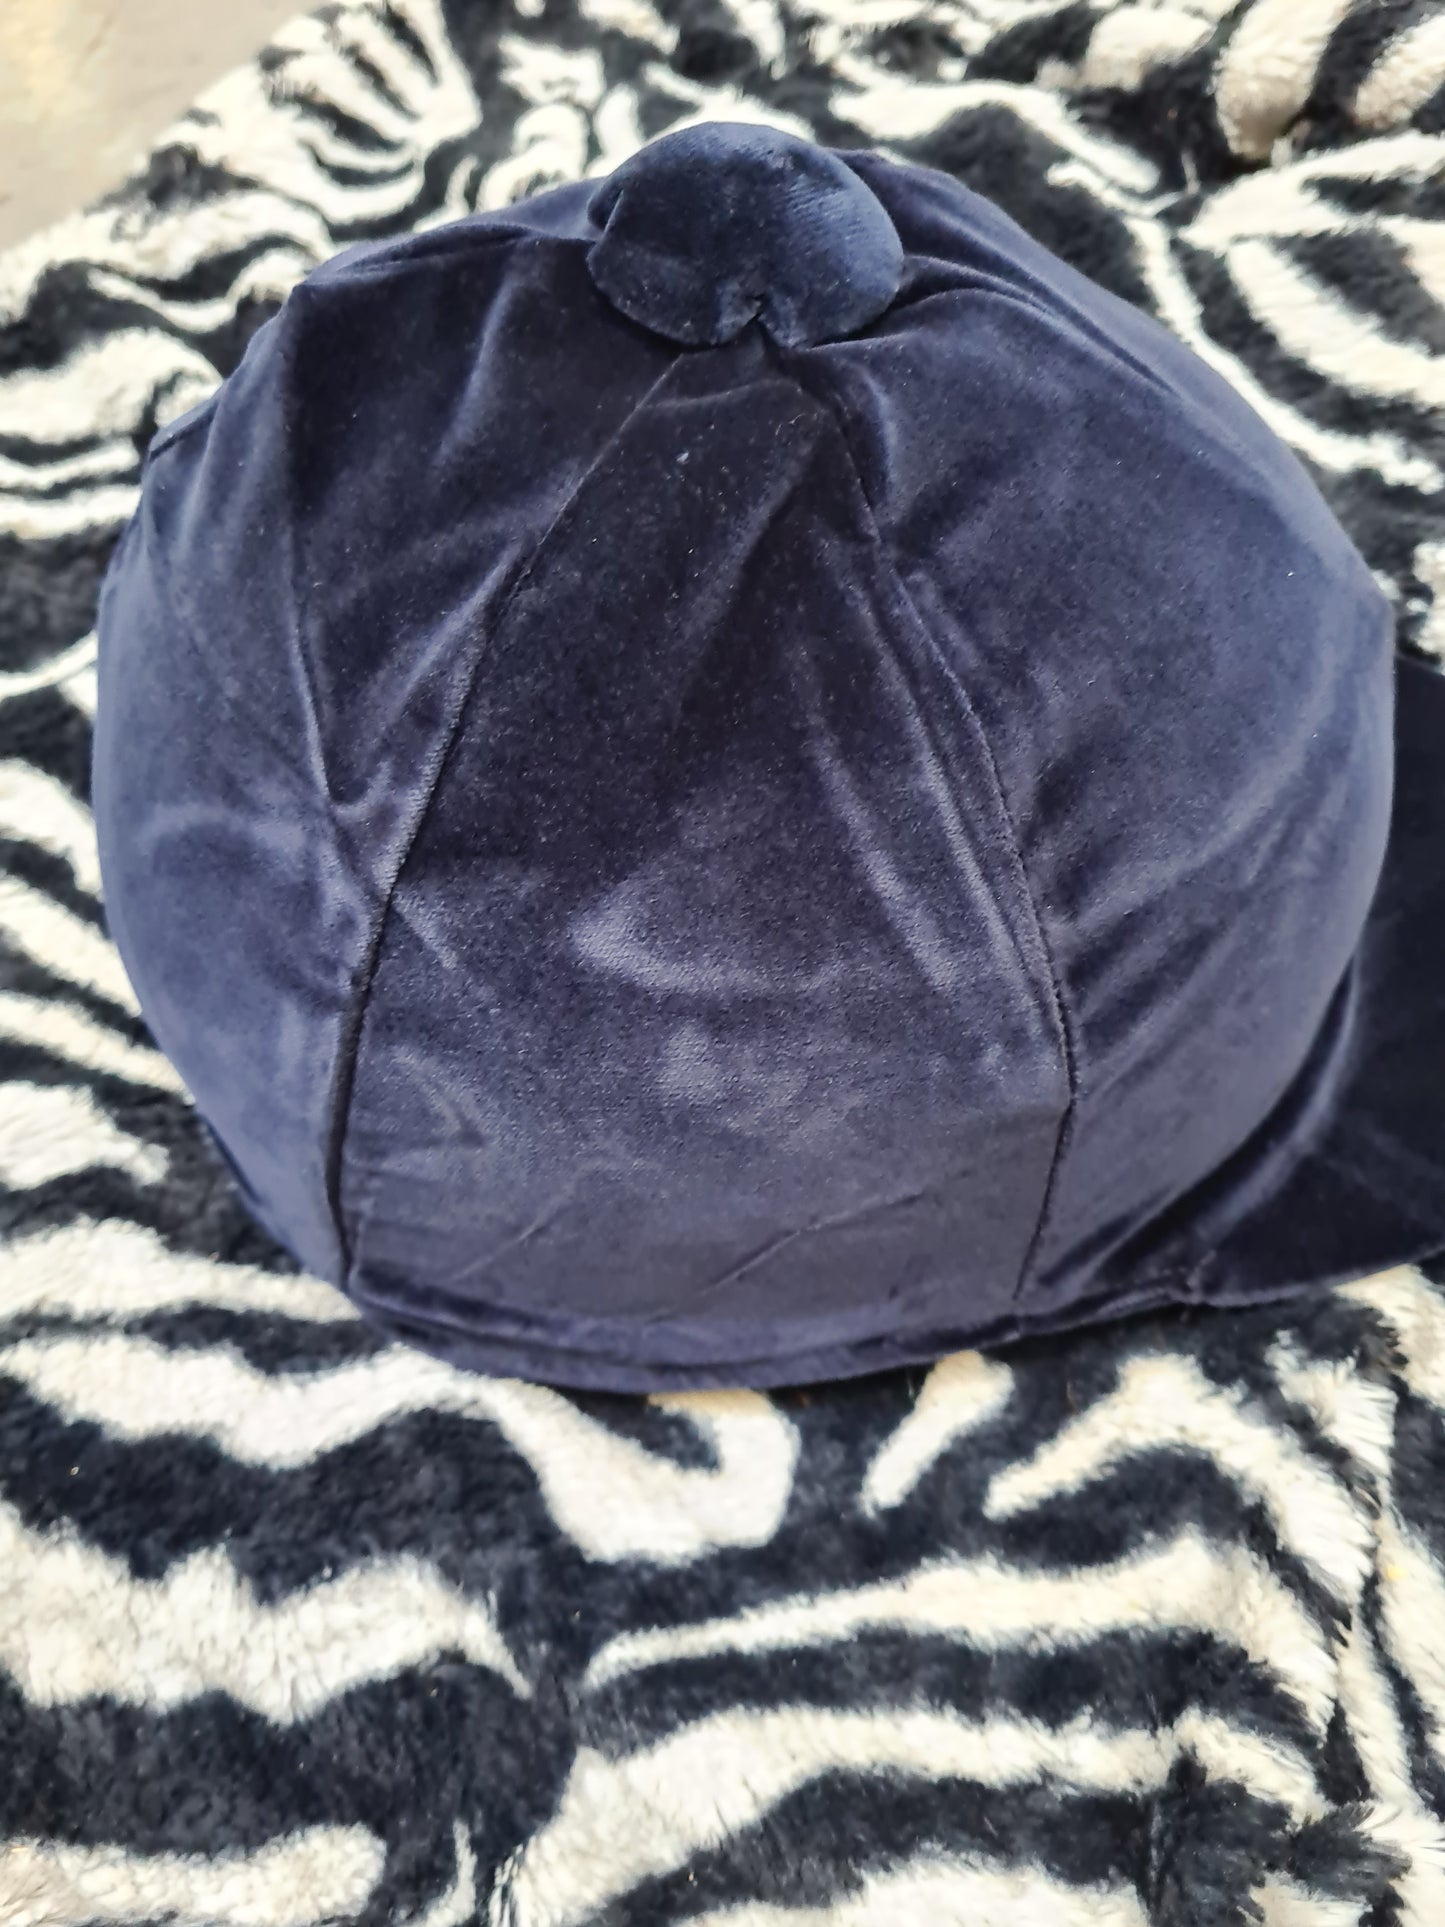 New champion navy velvet hat cover FREE POSTAGE 🟣